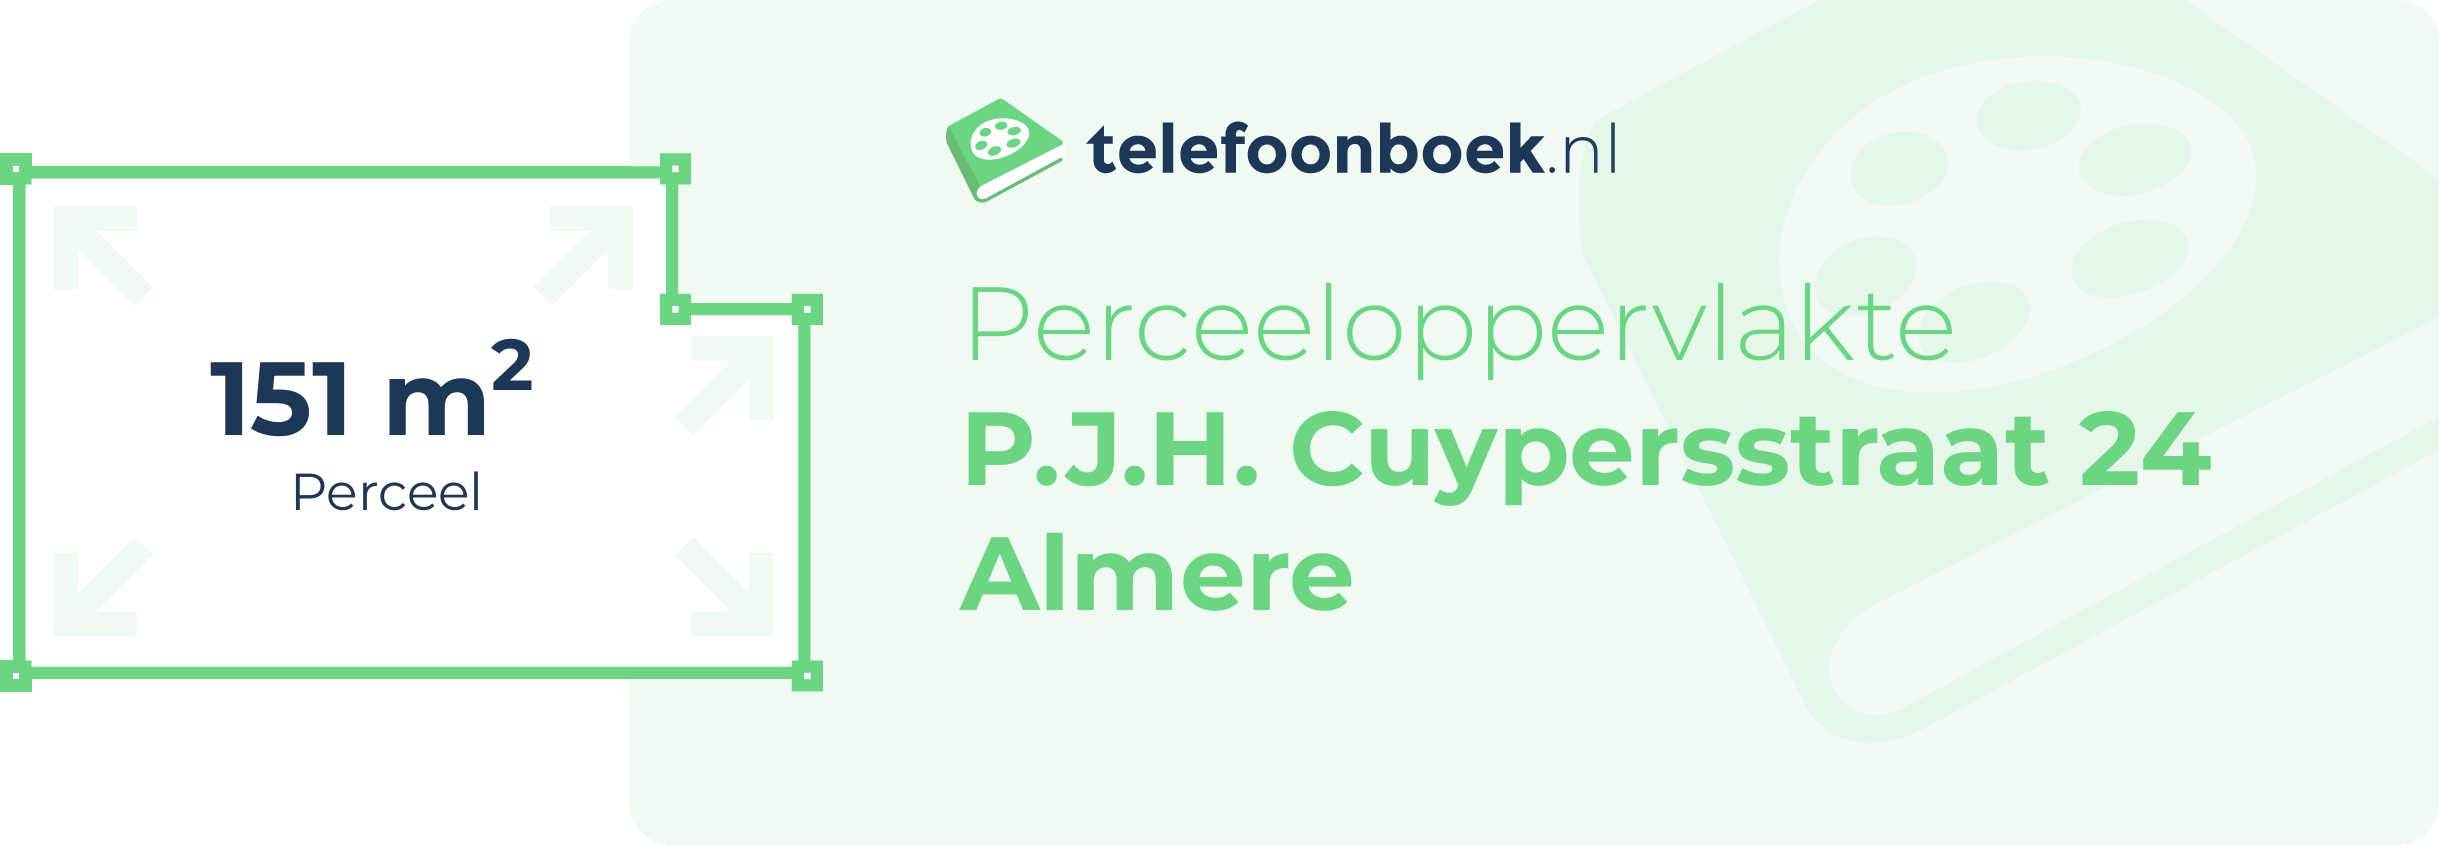 Perceeloppervlakte P.J.H. Cuypersstraat 24 Almere